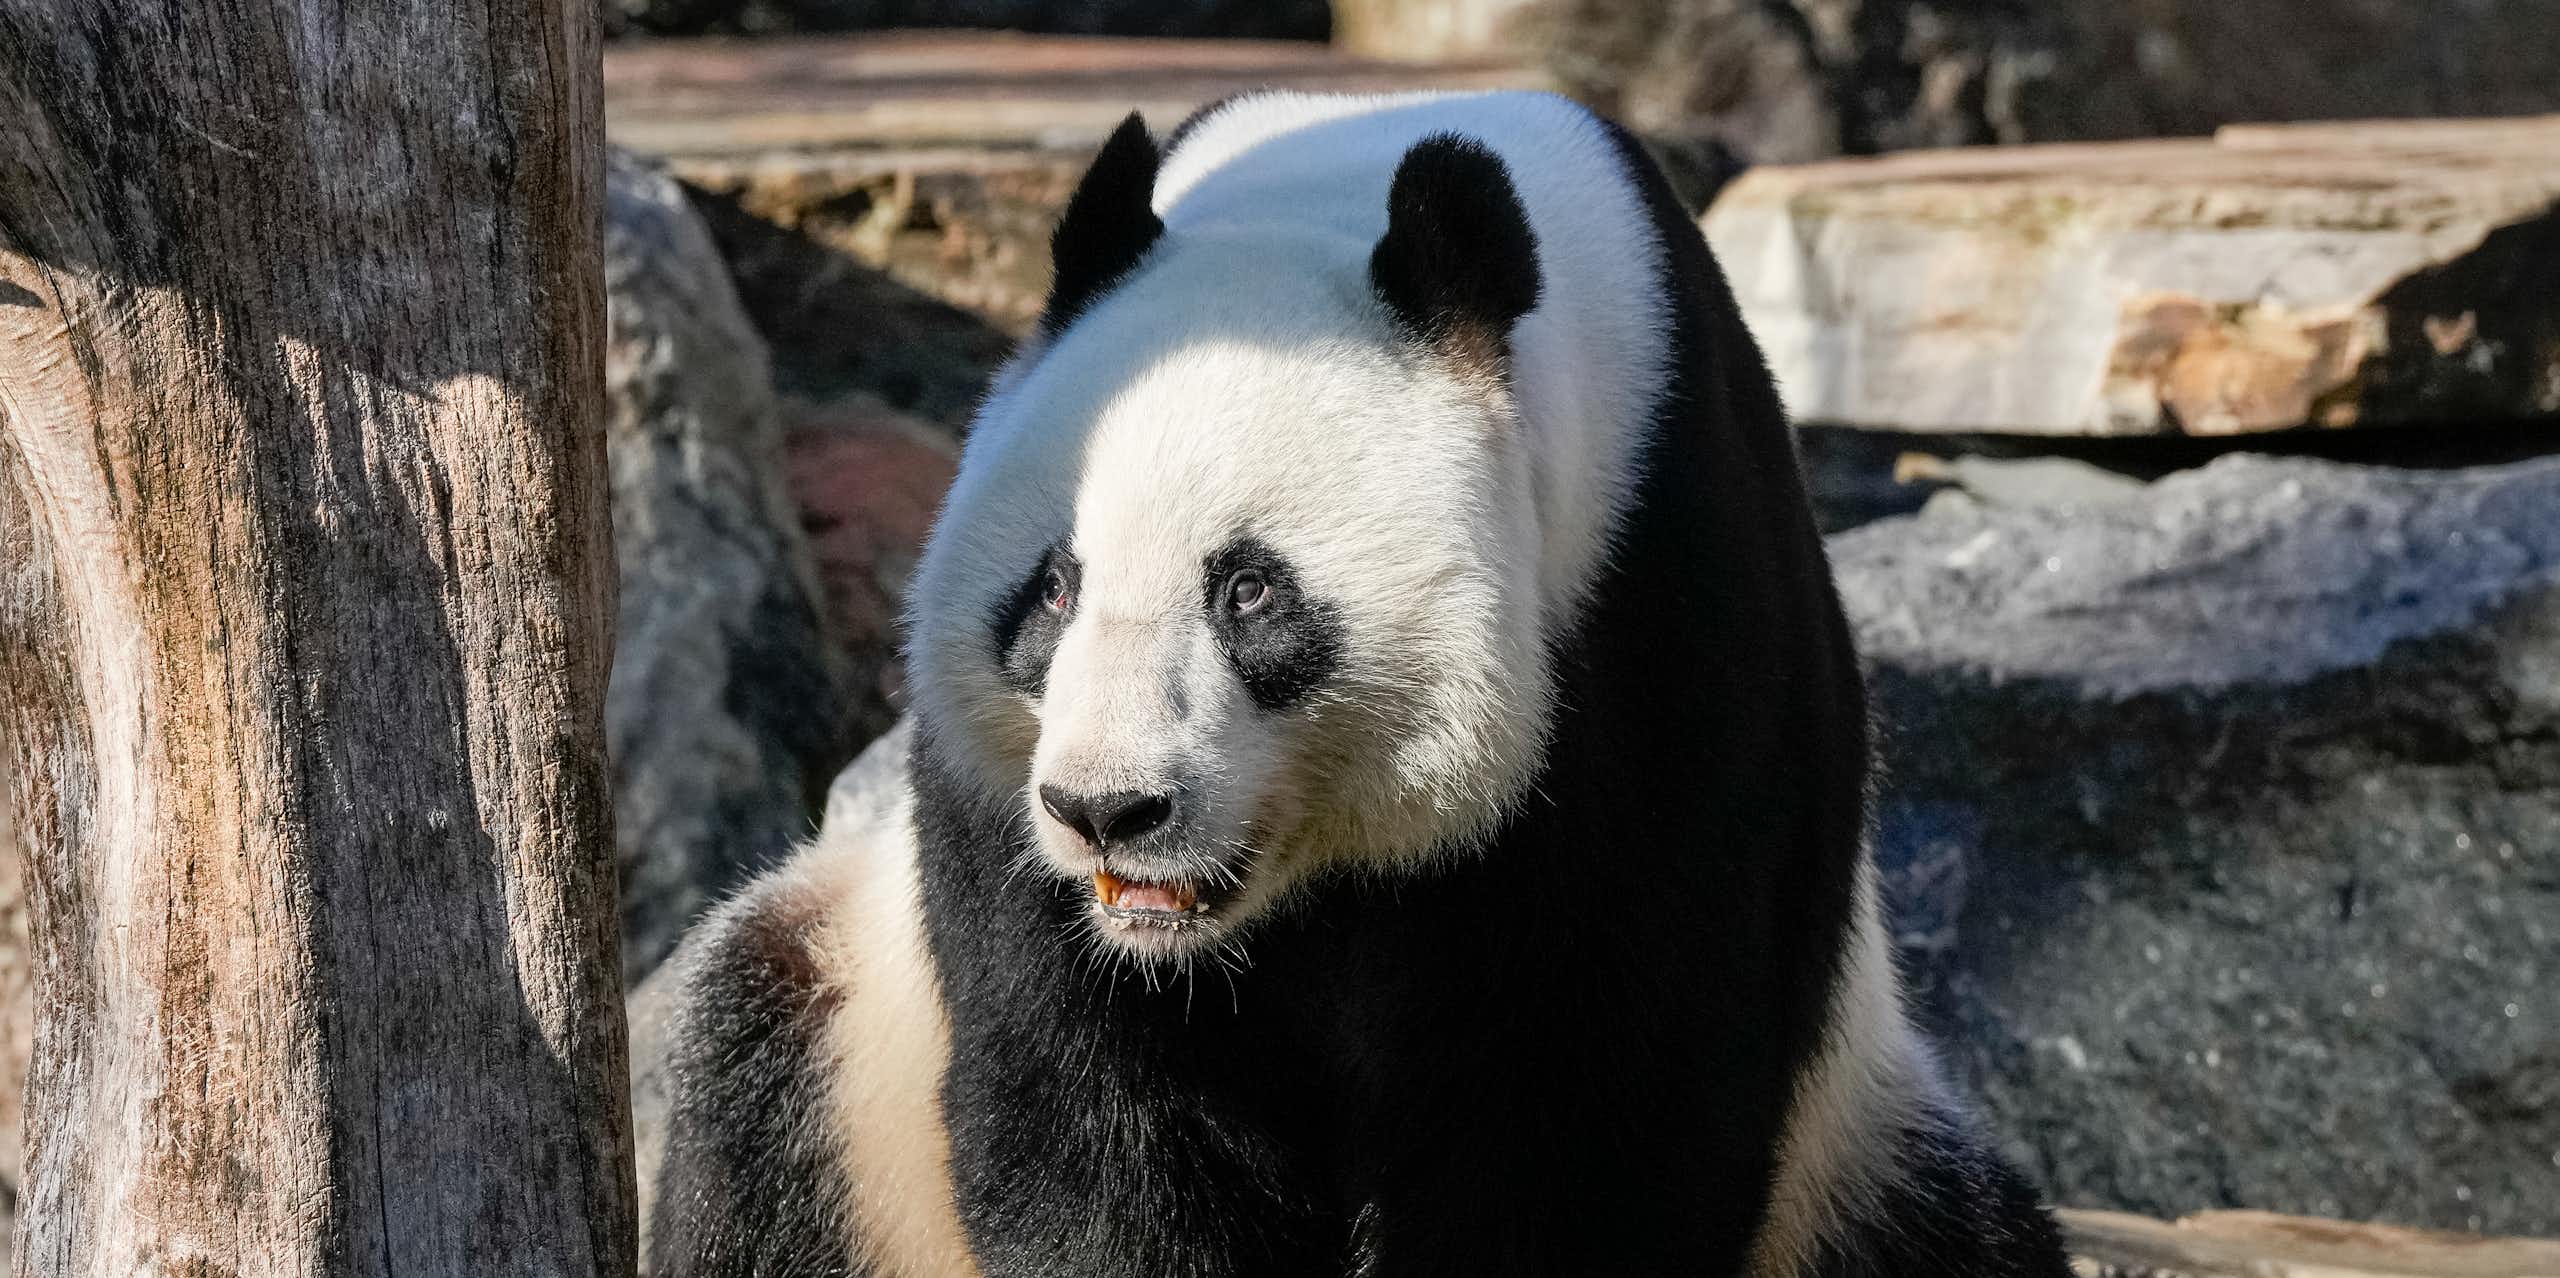 Charming ambassadors with big appetites and universal appeal: China’s long history of ‘panda diplomacy’